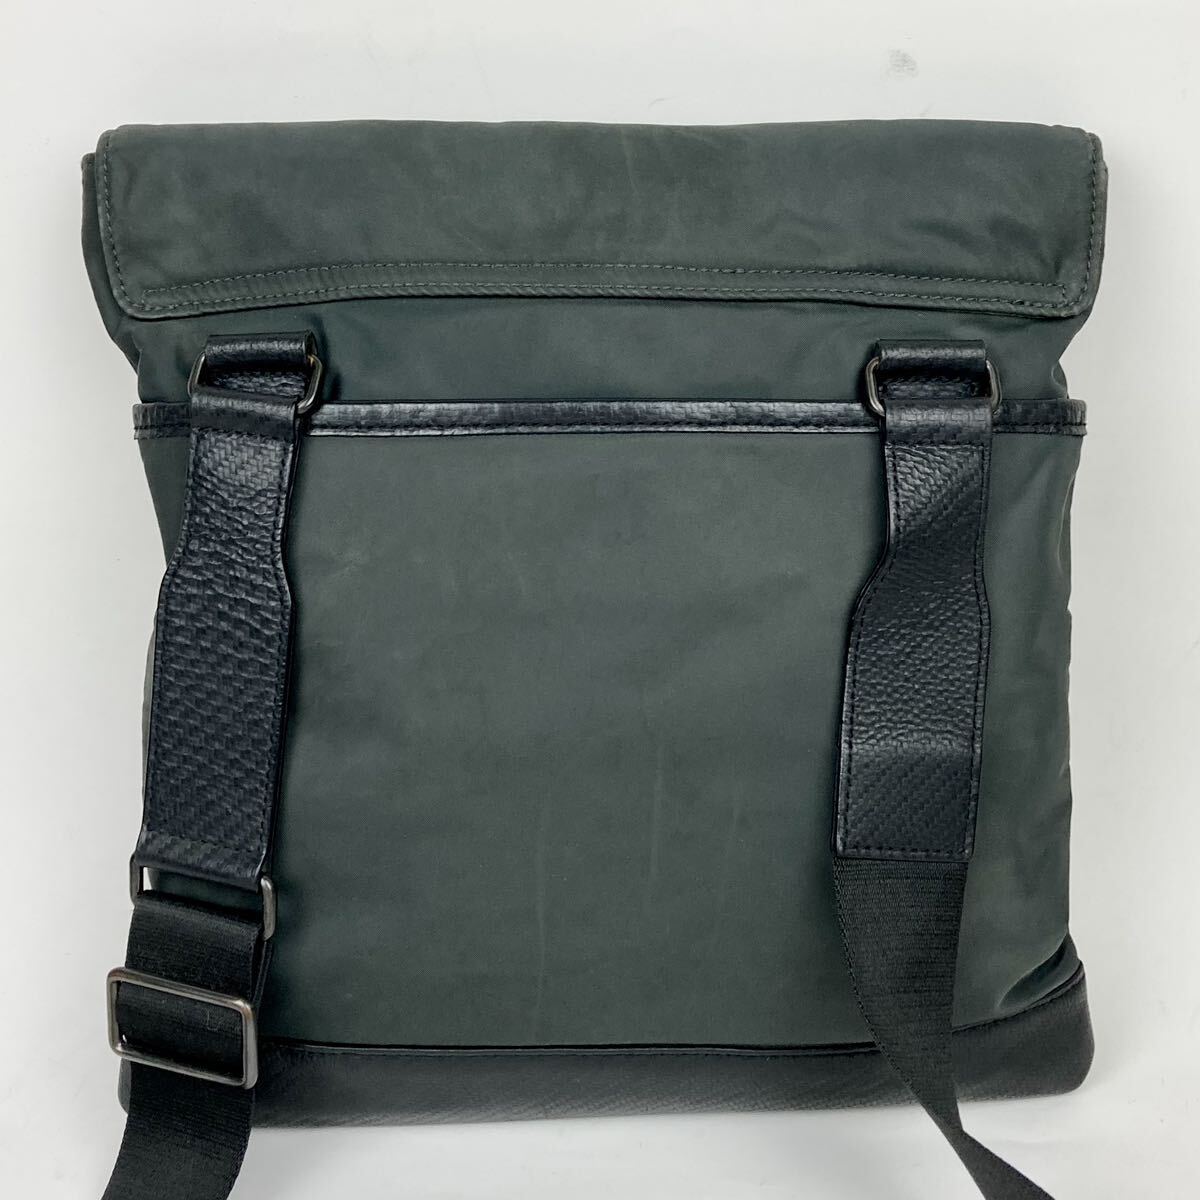 A4 storage dunhill Dunhill shoulder bag diagonal .. Cross body mesenja-sakoshu men's business nylon gray black 